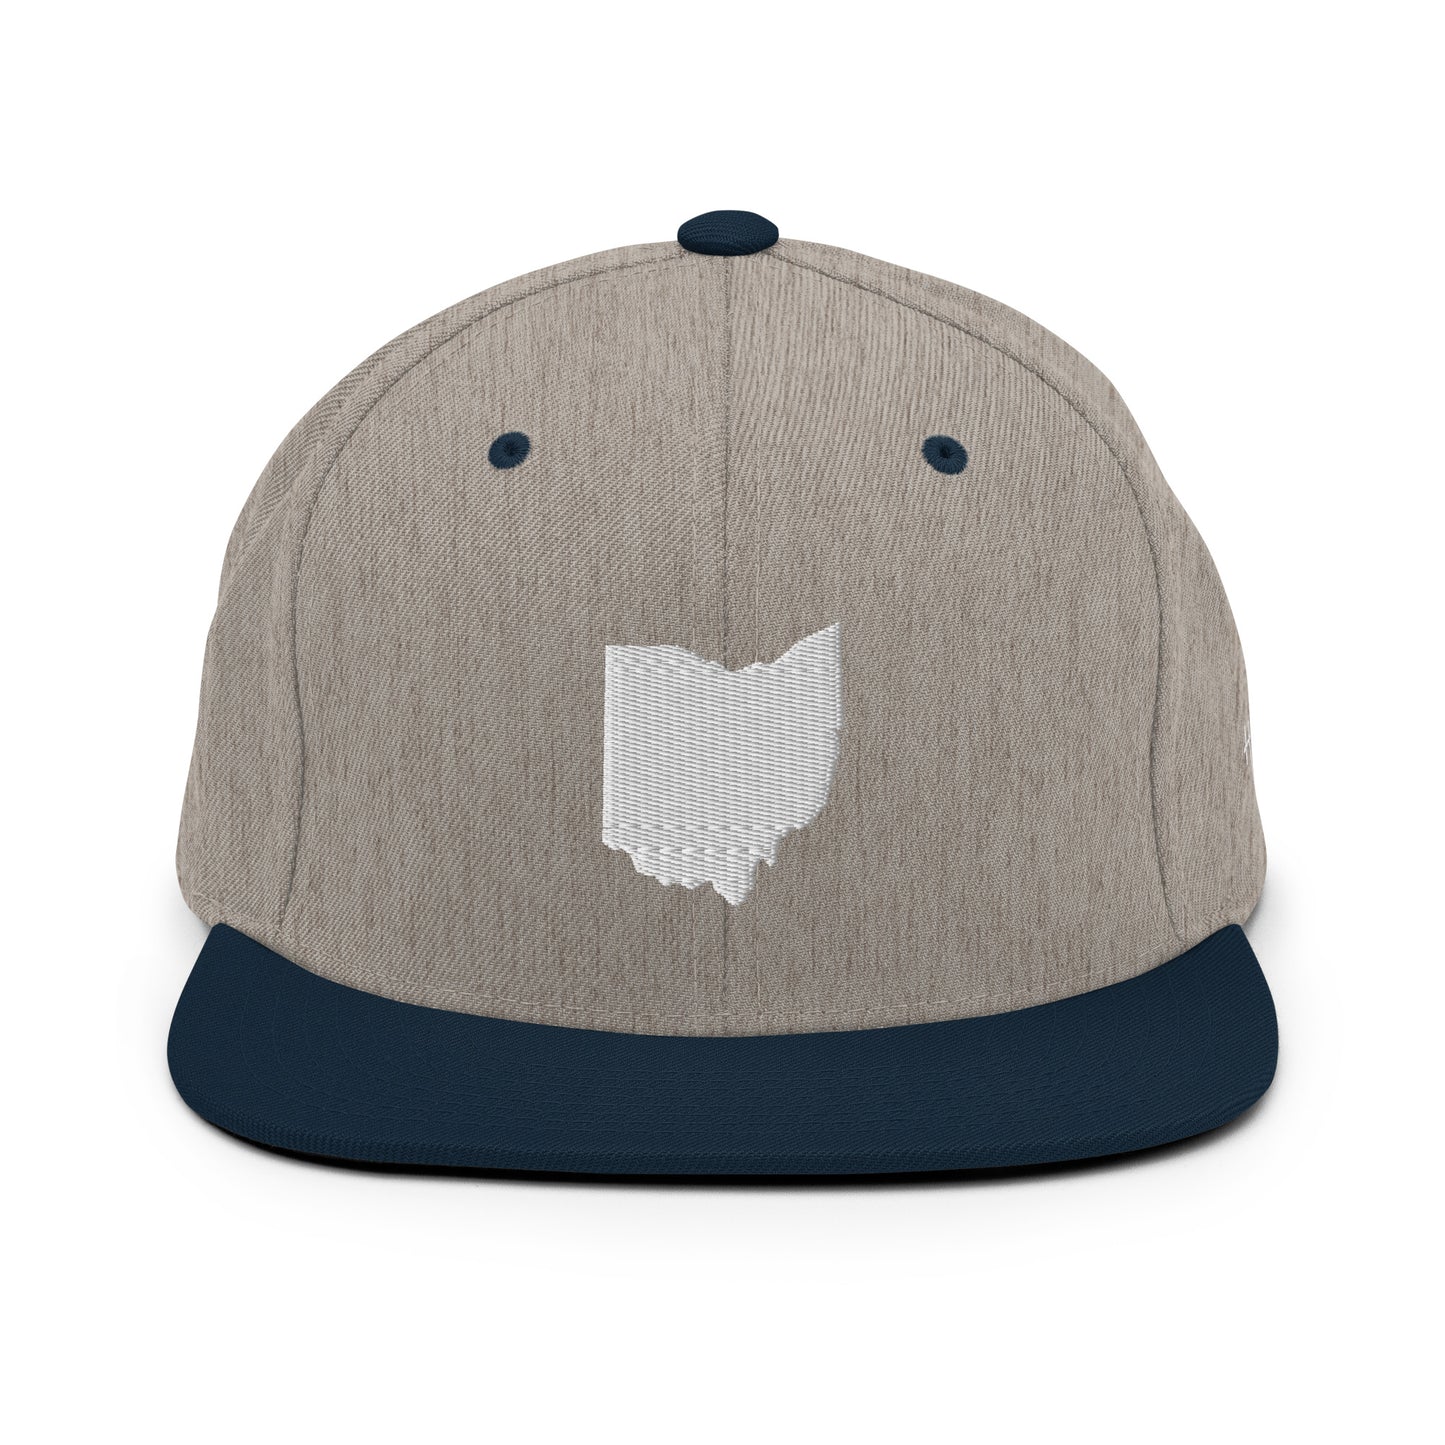 Ohio State Silhouette 6 Panel Snapback Hat